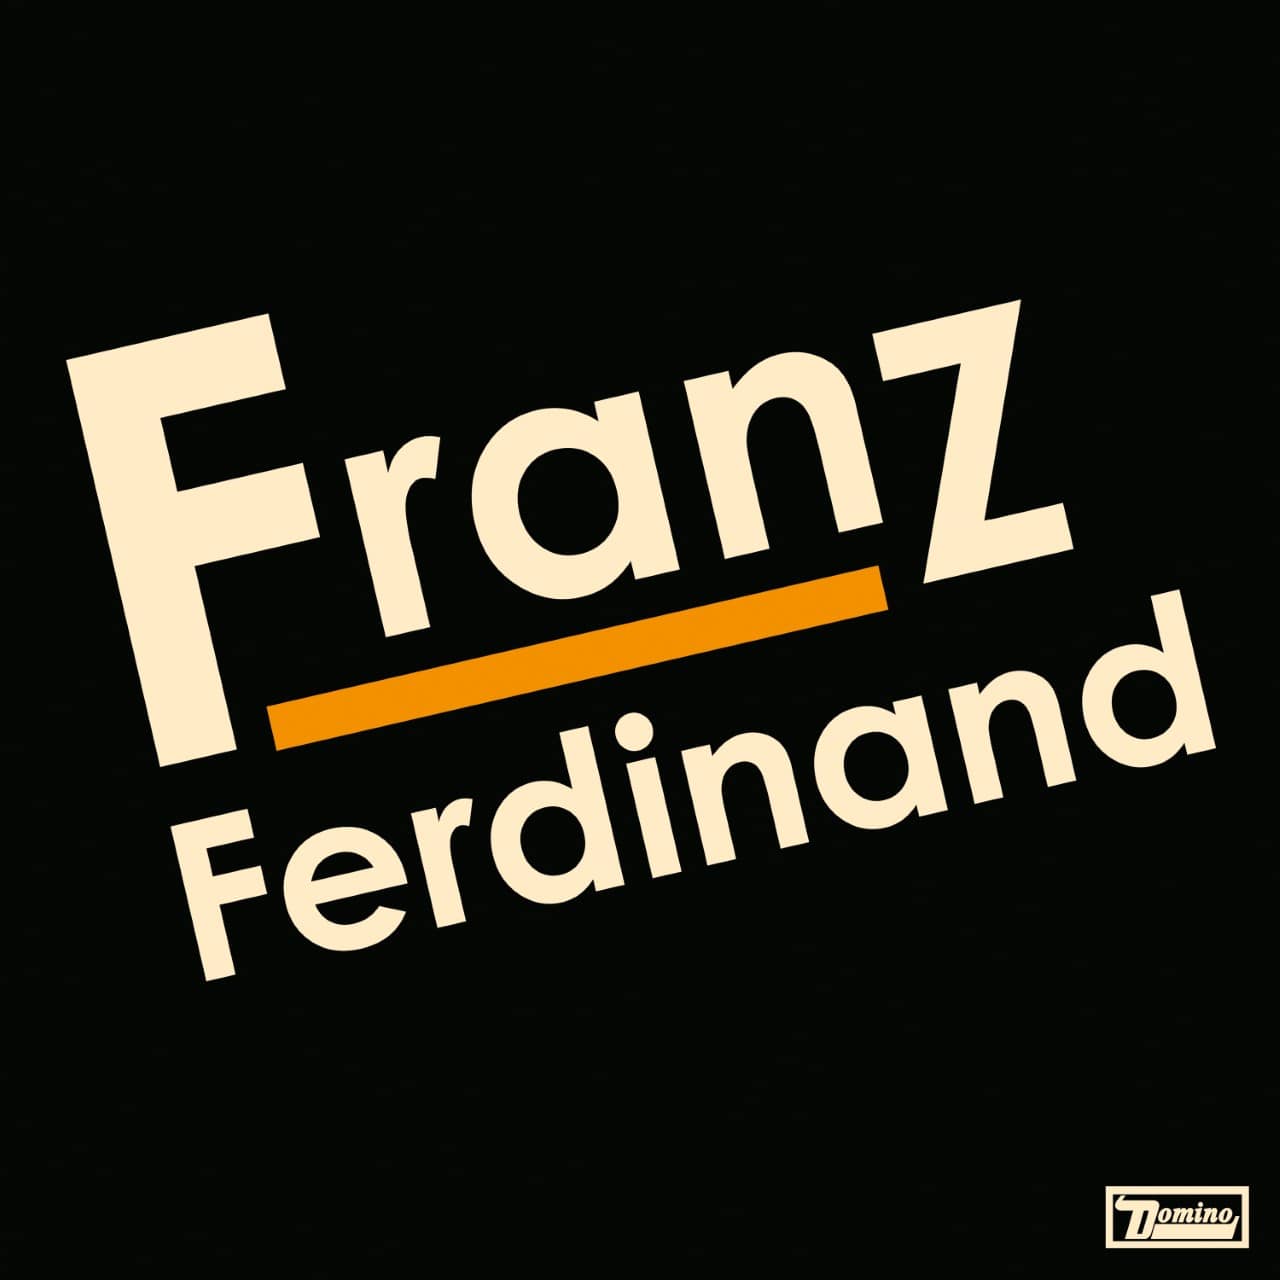 Franz-Ferdinand.jpg